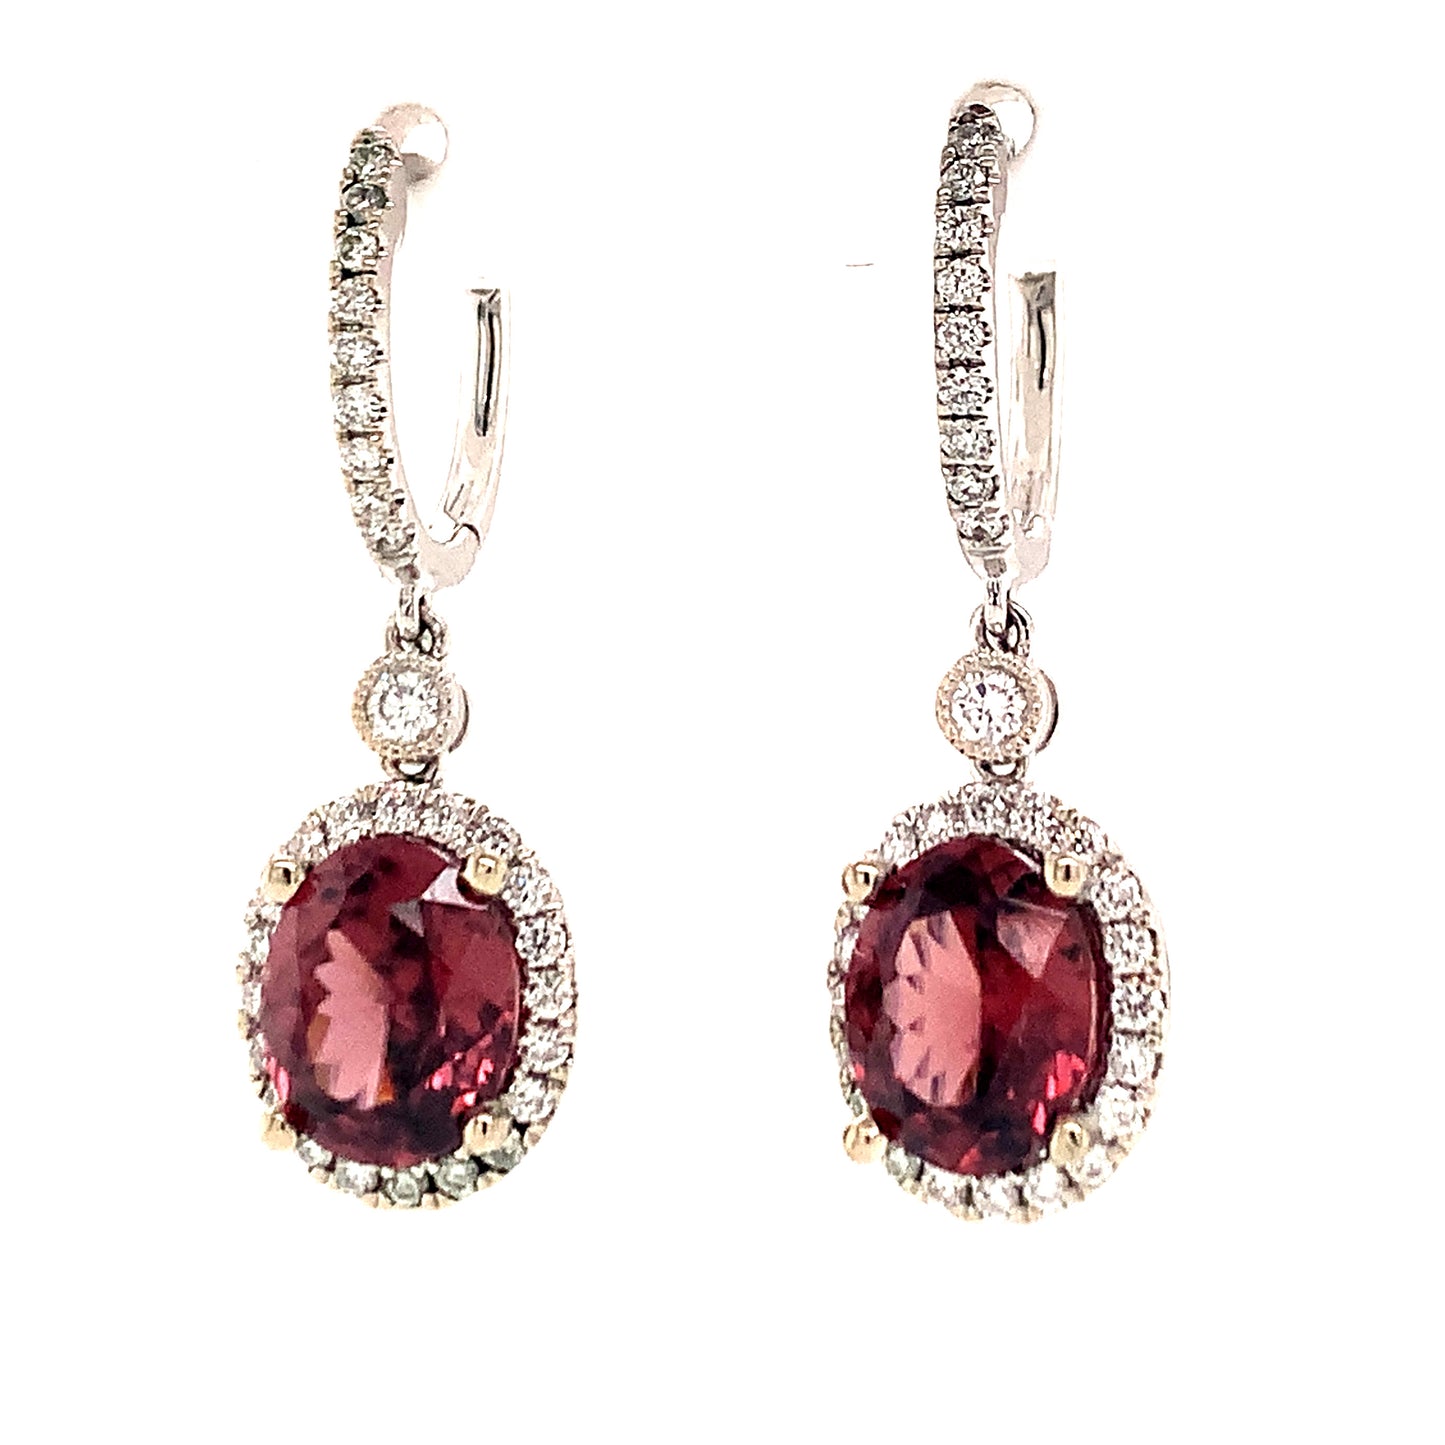 Natural Tourmaline Rubellite Diamond Earrings 18k Gold 6.62 TCW Certified $6,950 017705 - Certified Estate Jewelry